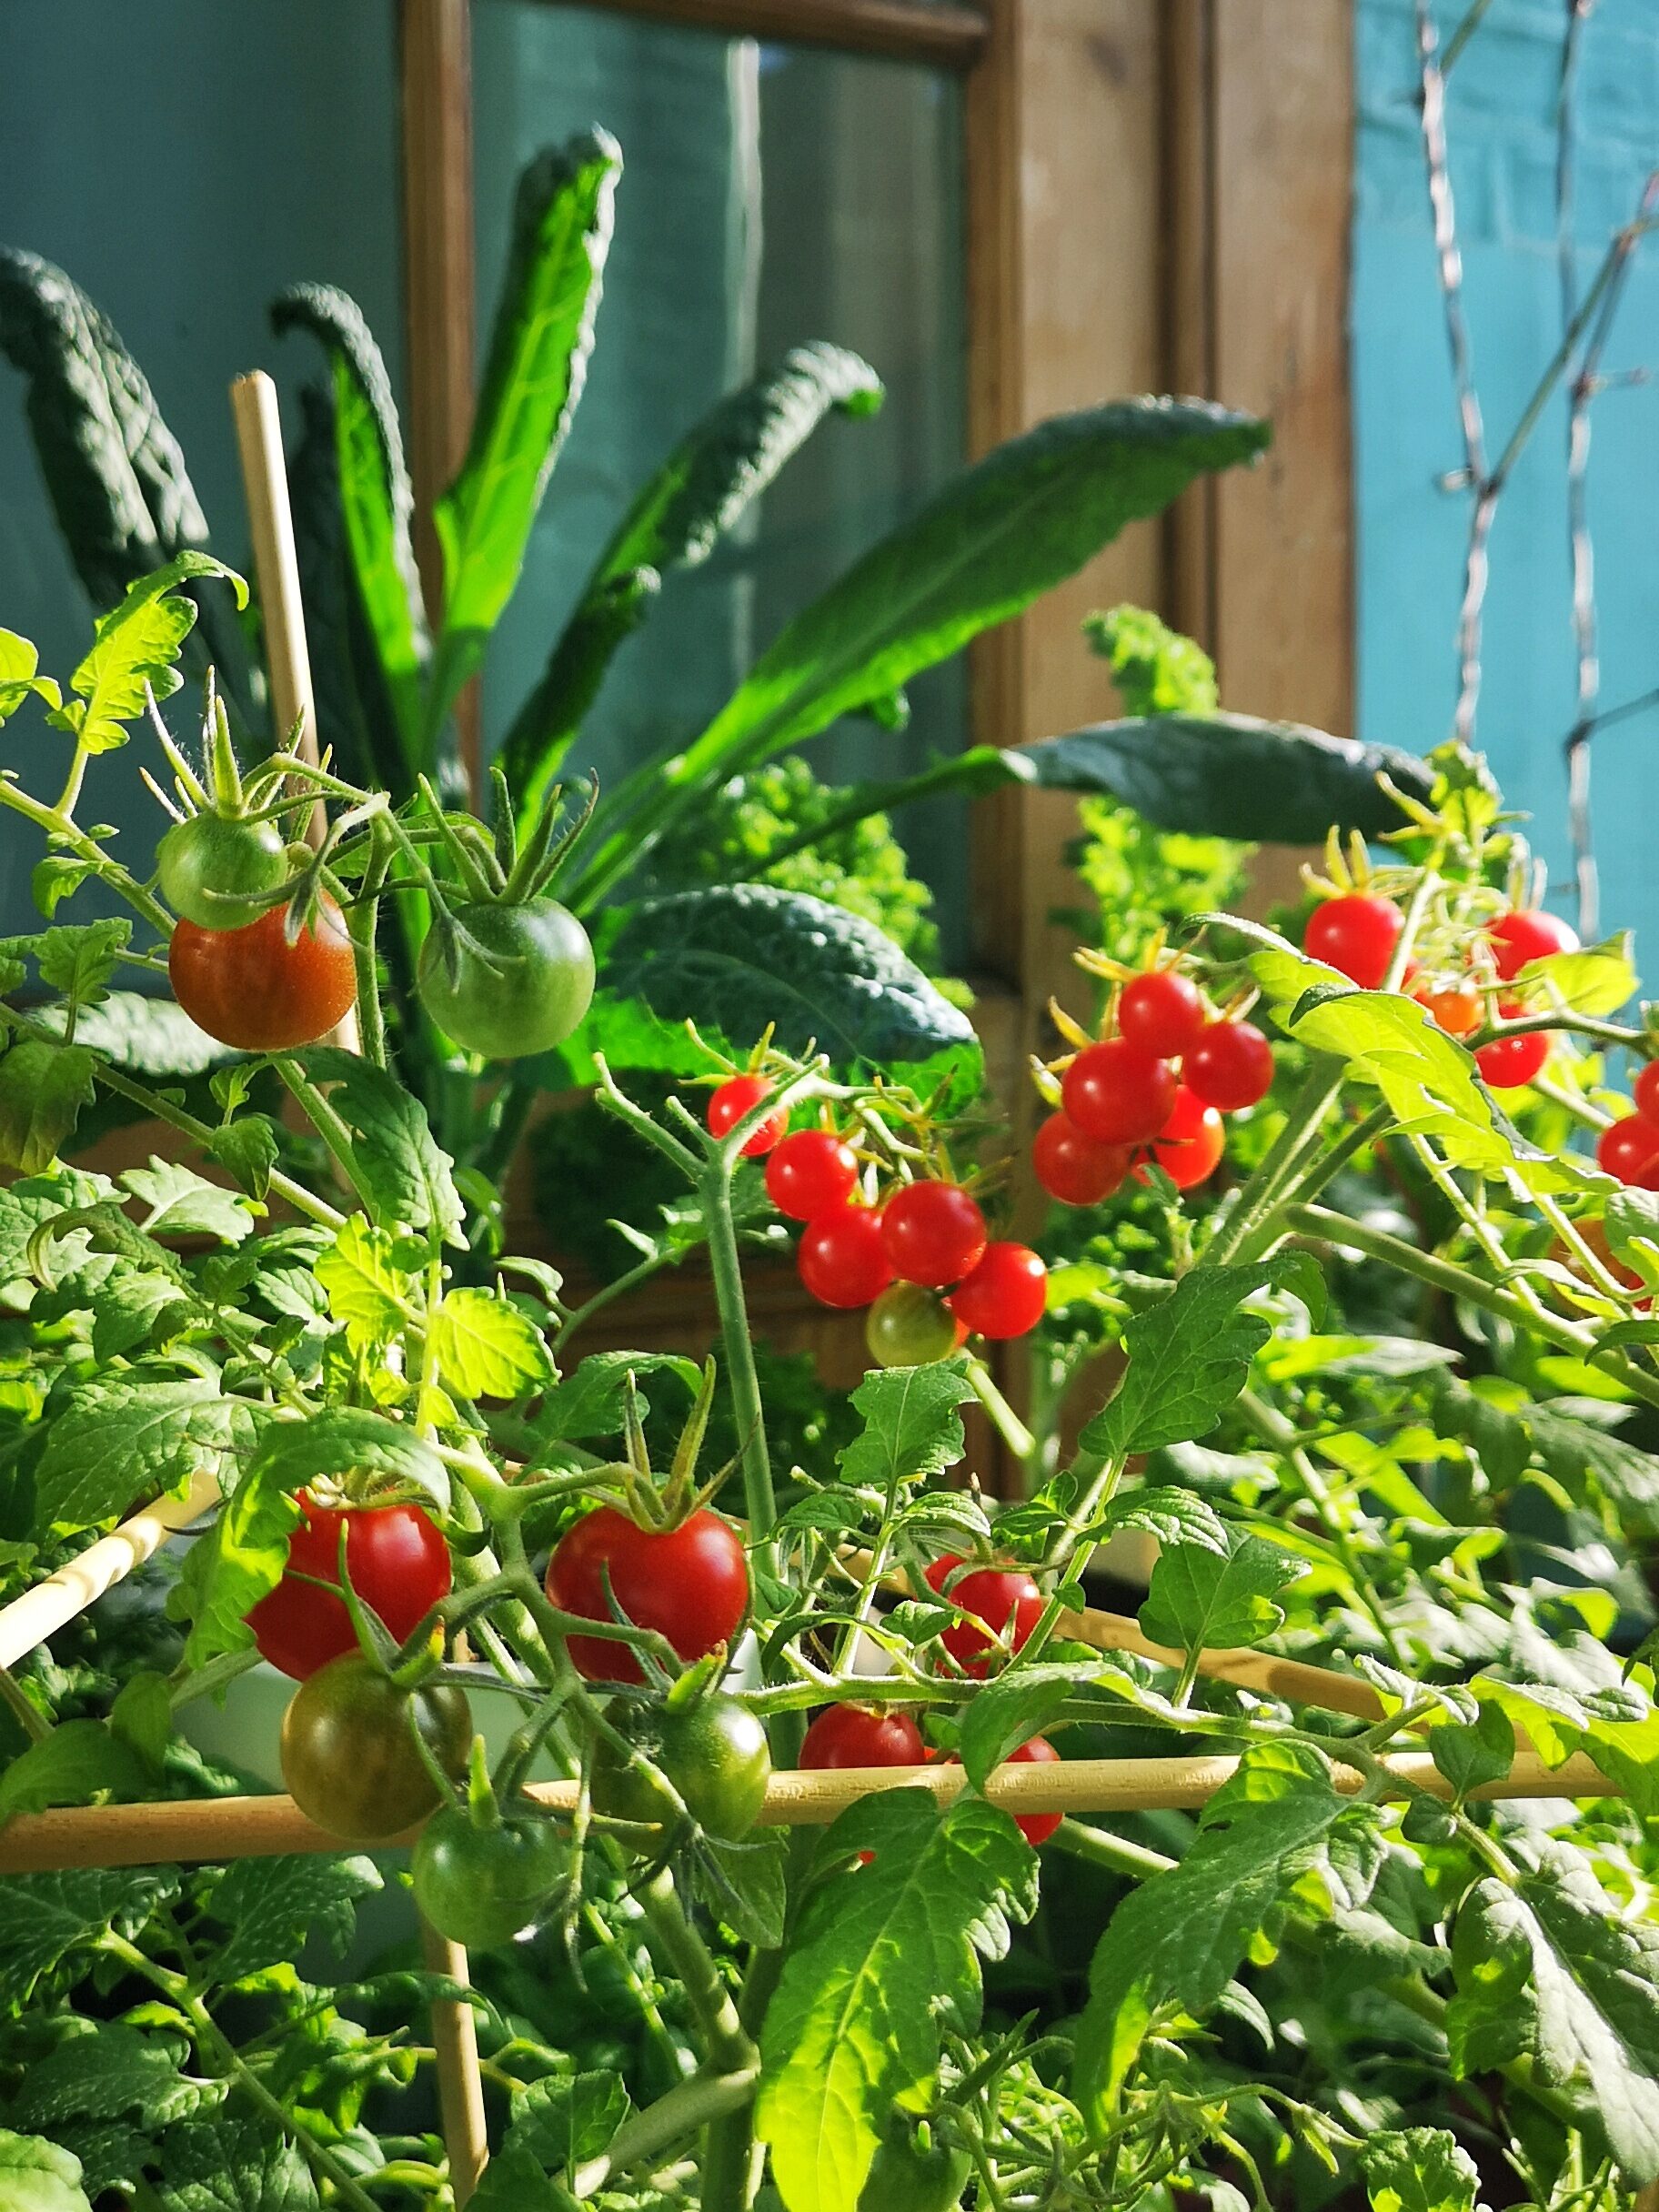 Abundant tomato plants and Cavolo Nero (kale).